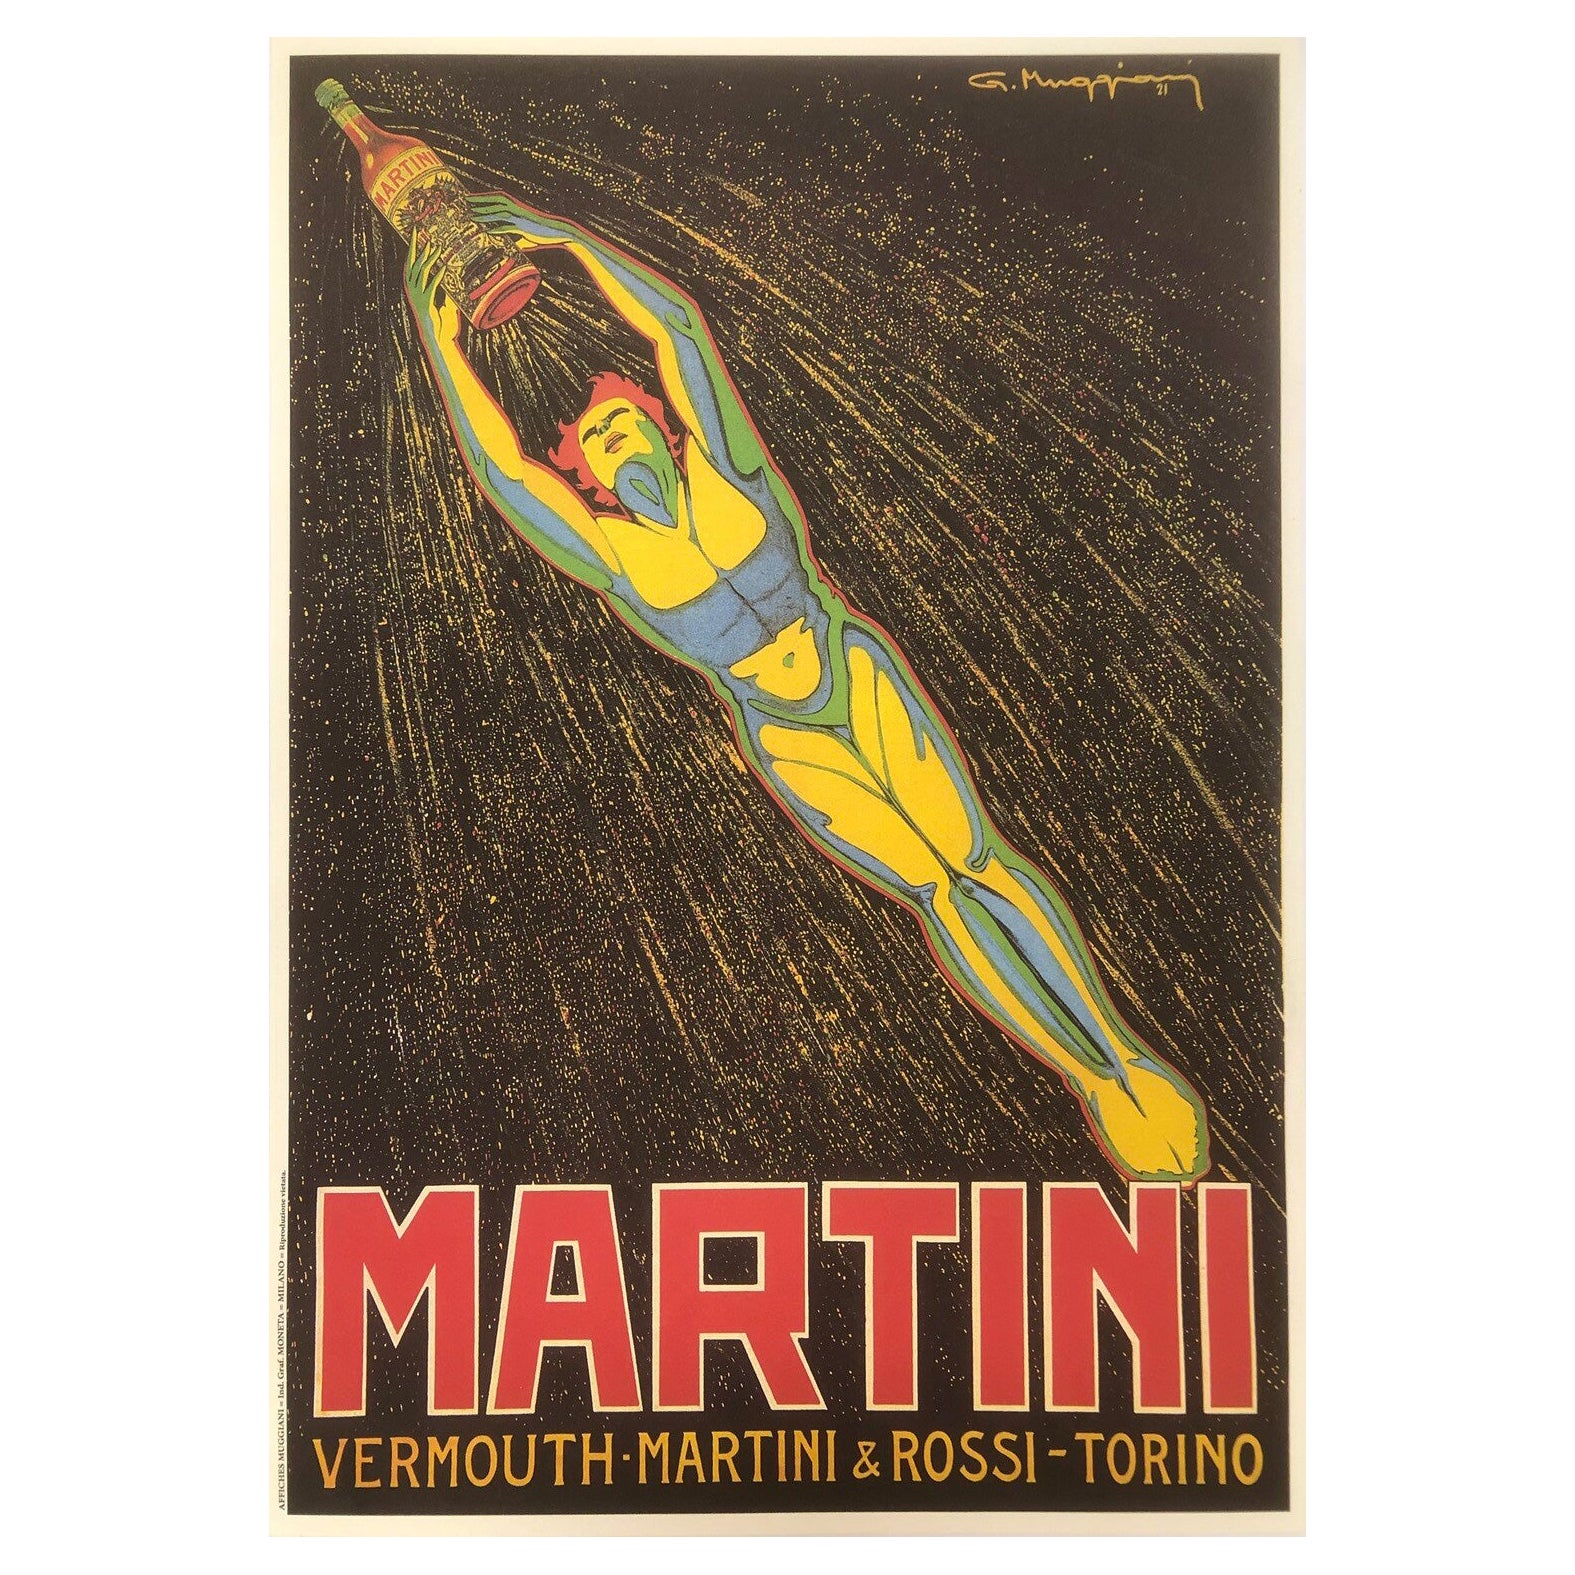 Vermouth Martini, 1980's Vintage Italian Alcohol Advertising Poster, Muggiani